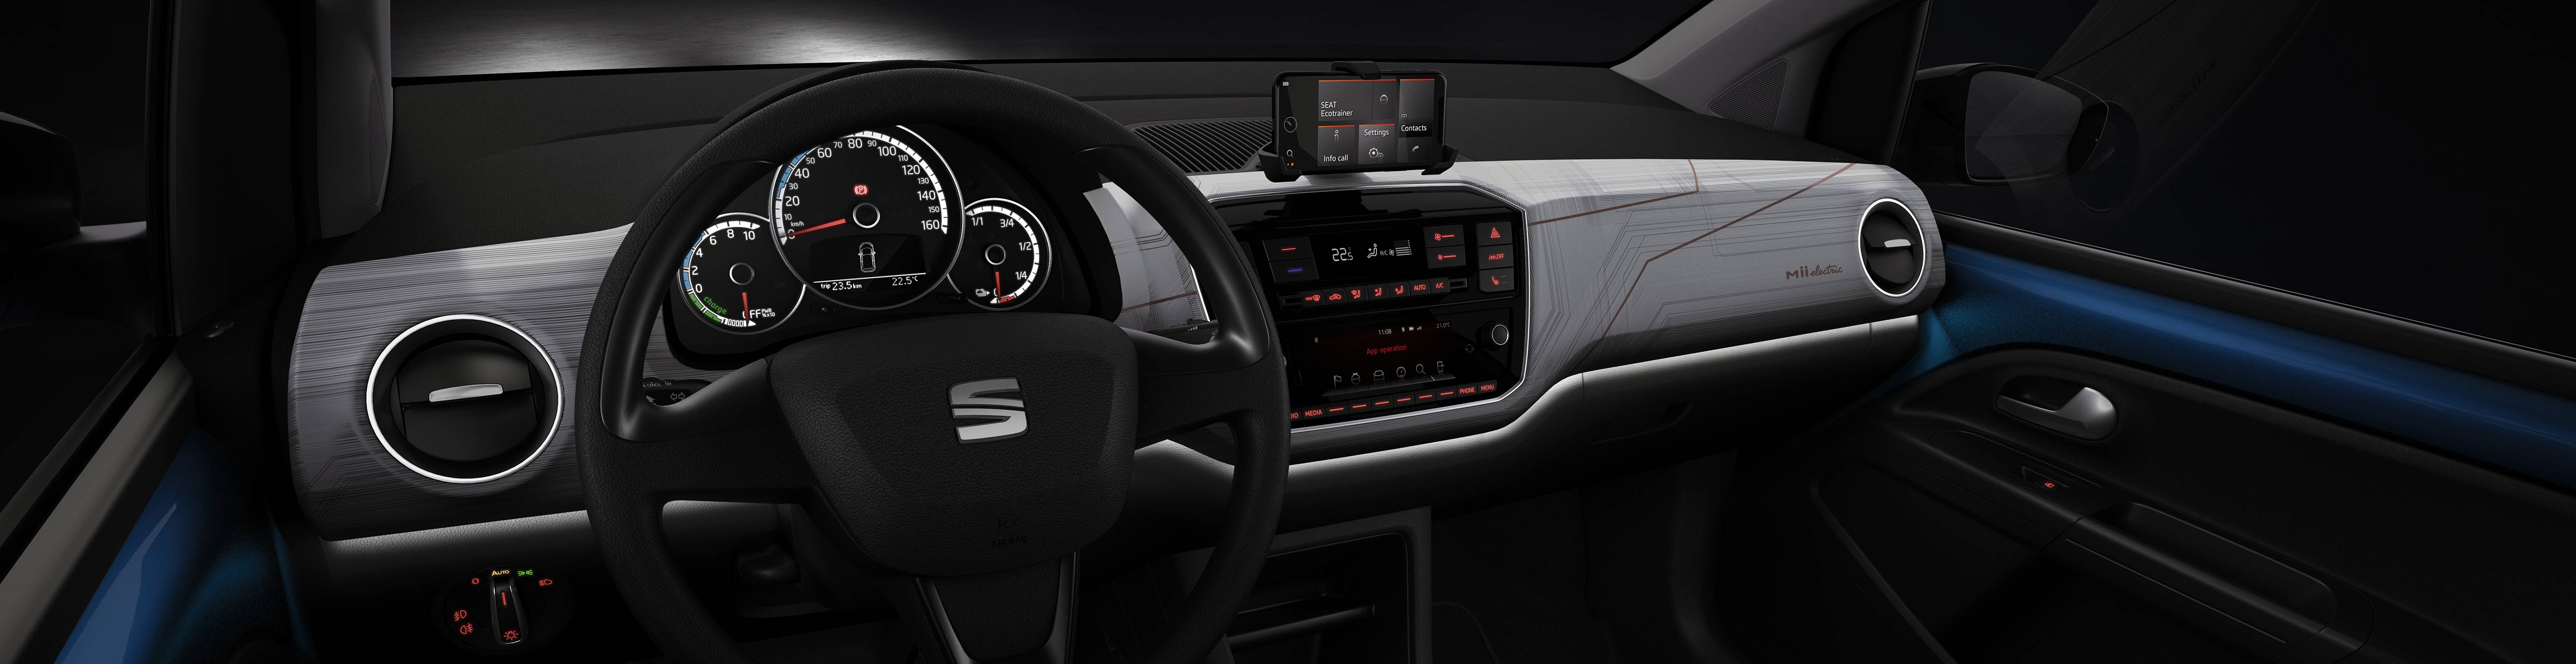 SEAT Mii electric dashboard interior